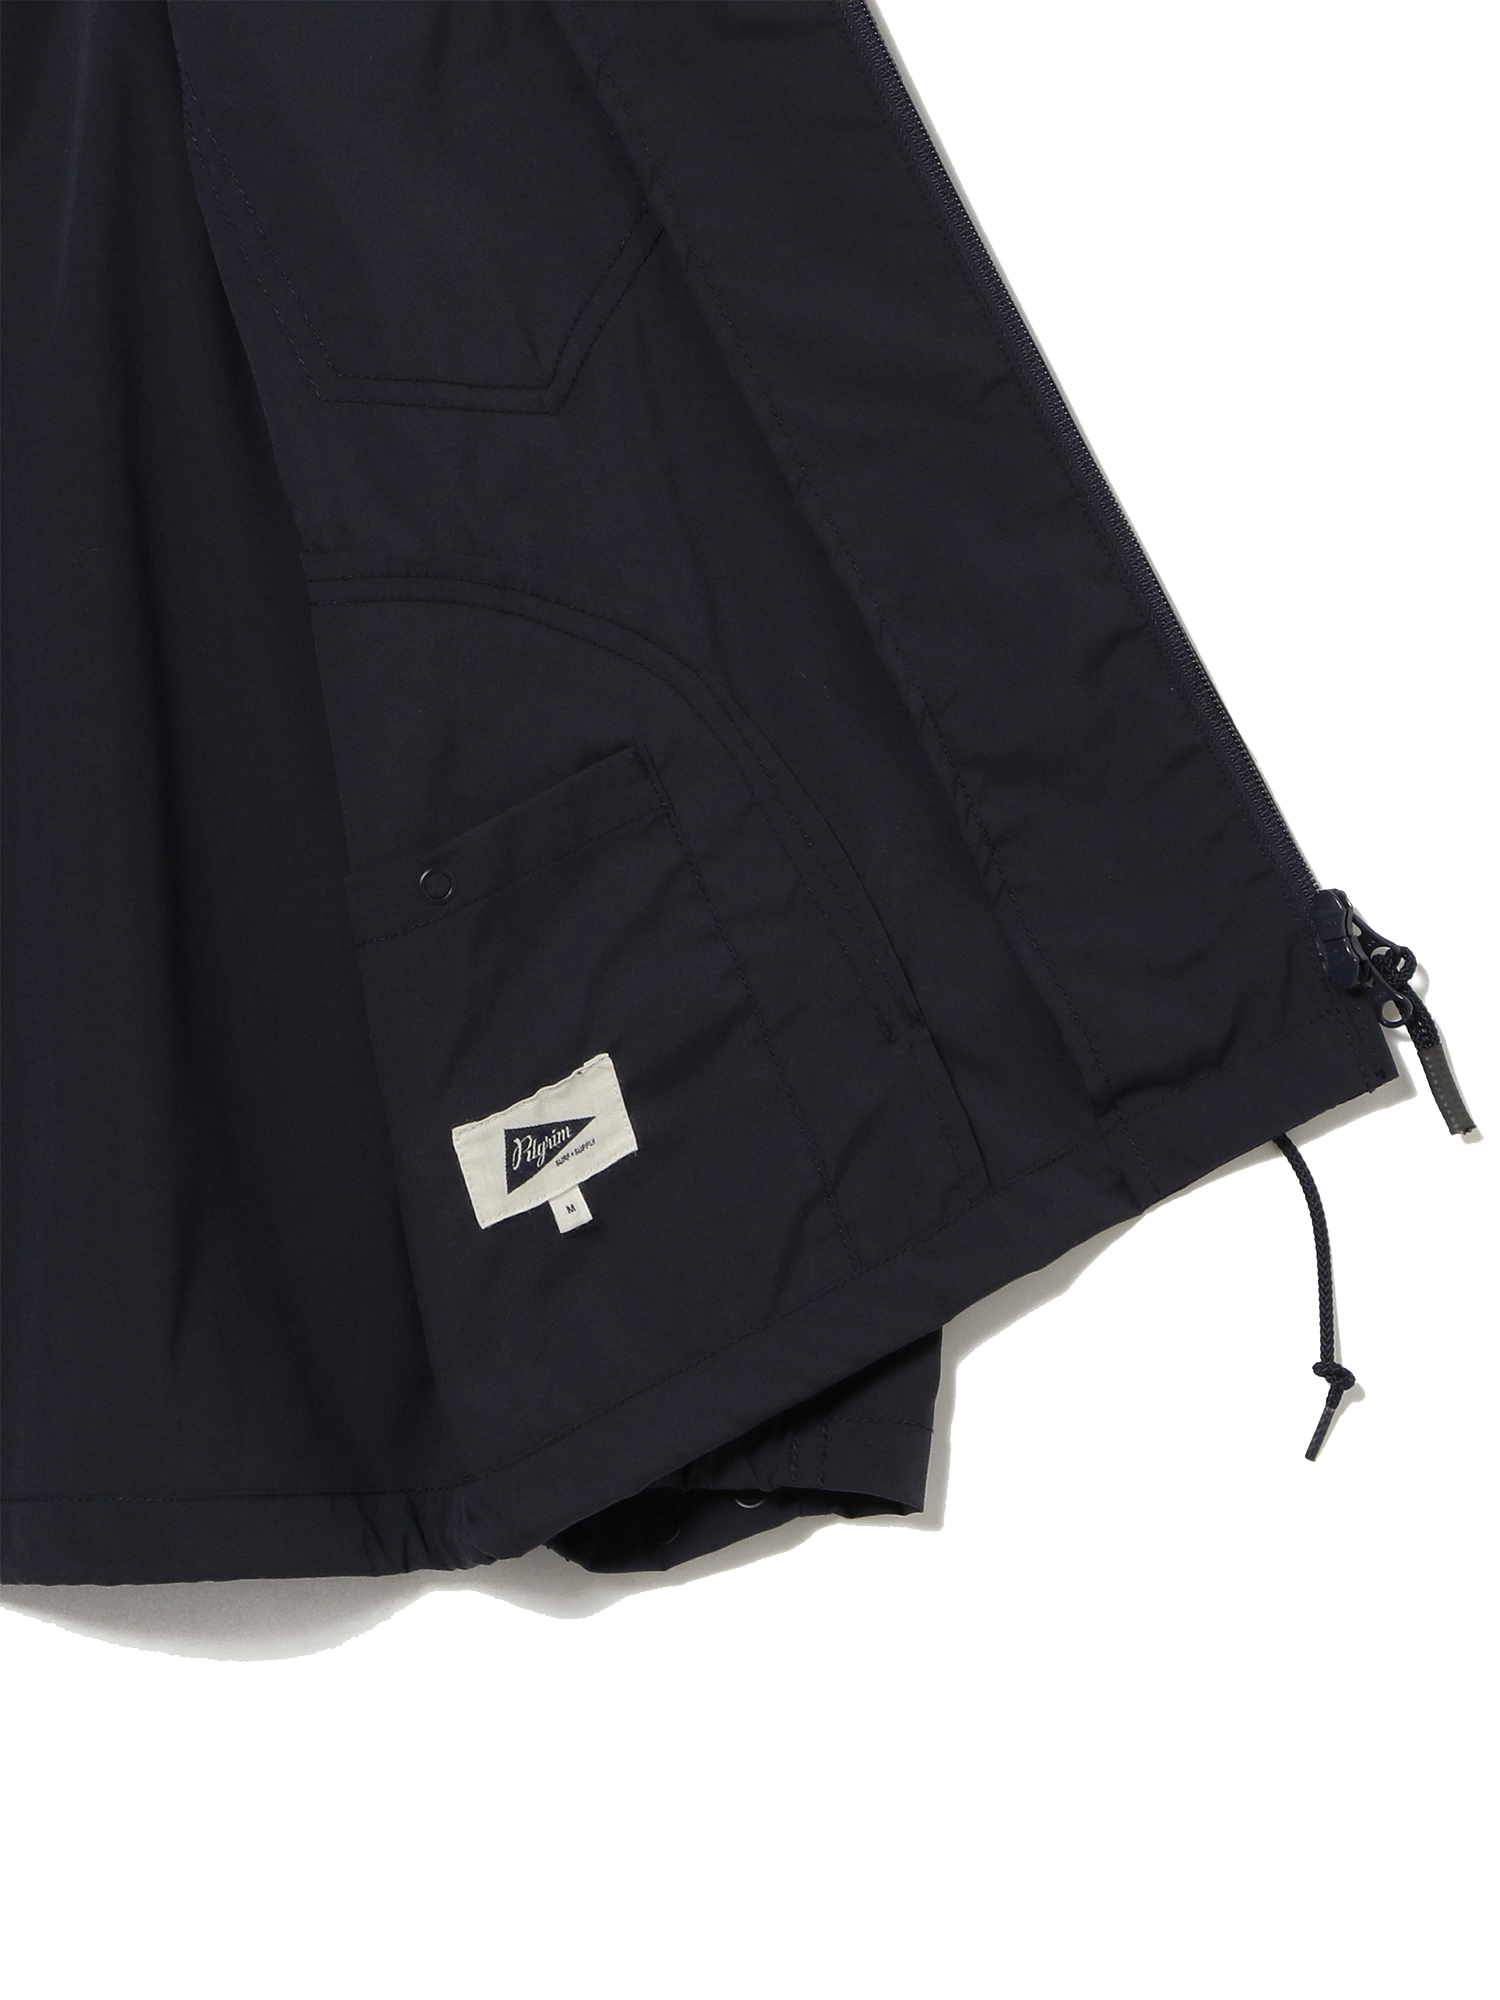 Pilgrim Surf + Supply - Jacket - Russel - Zip Parka - Navy